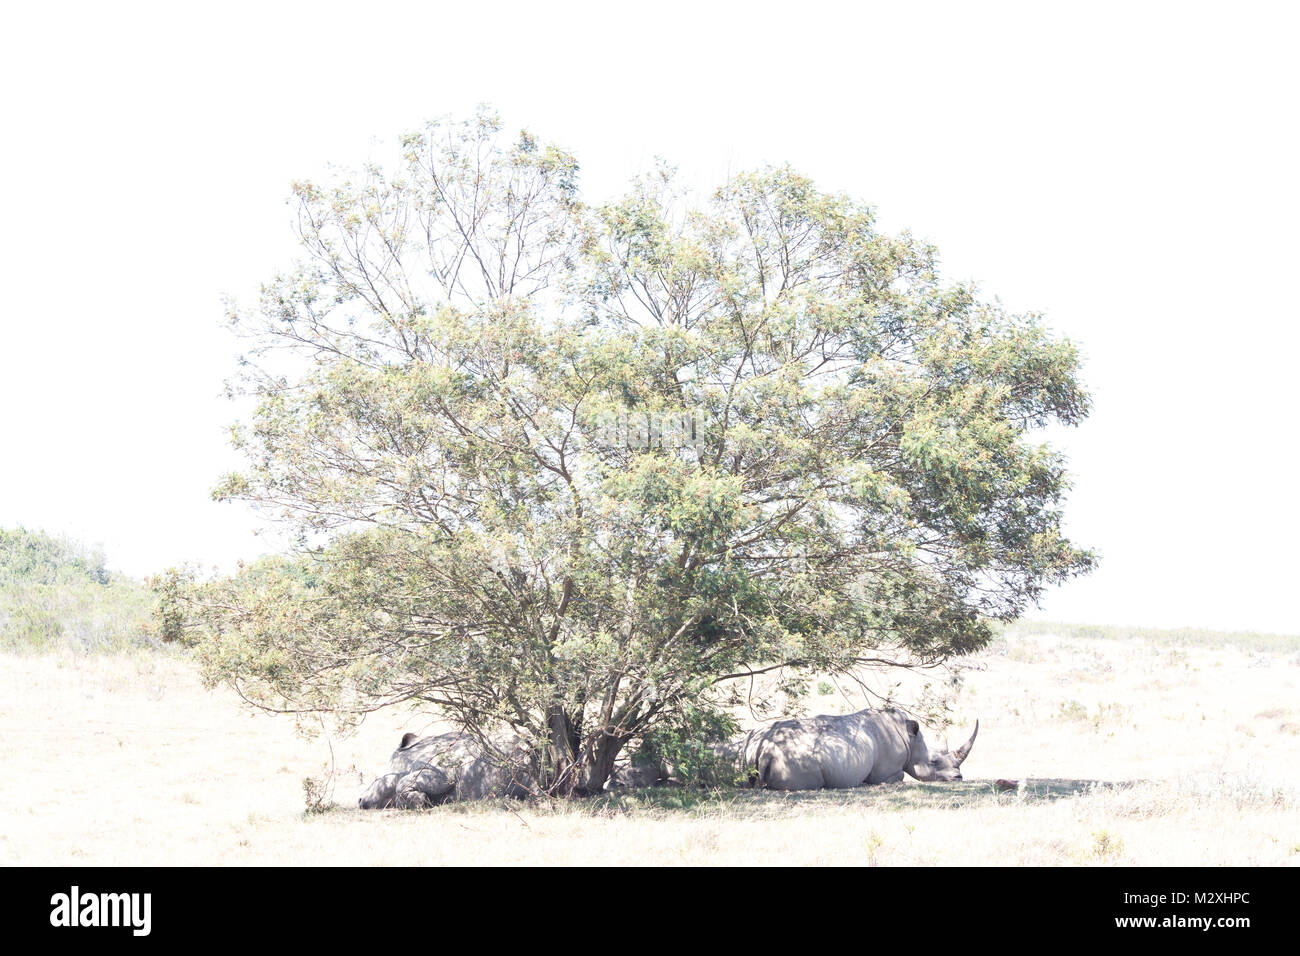 Un plantage de rhino dormir sous un arbre. Banque D'Images